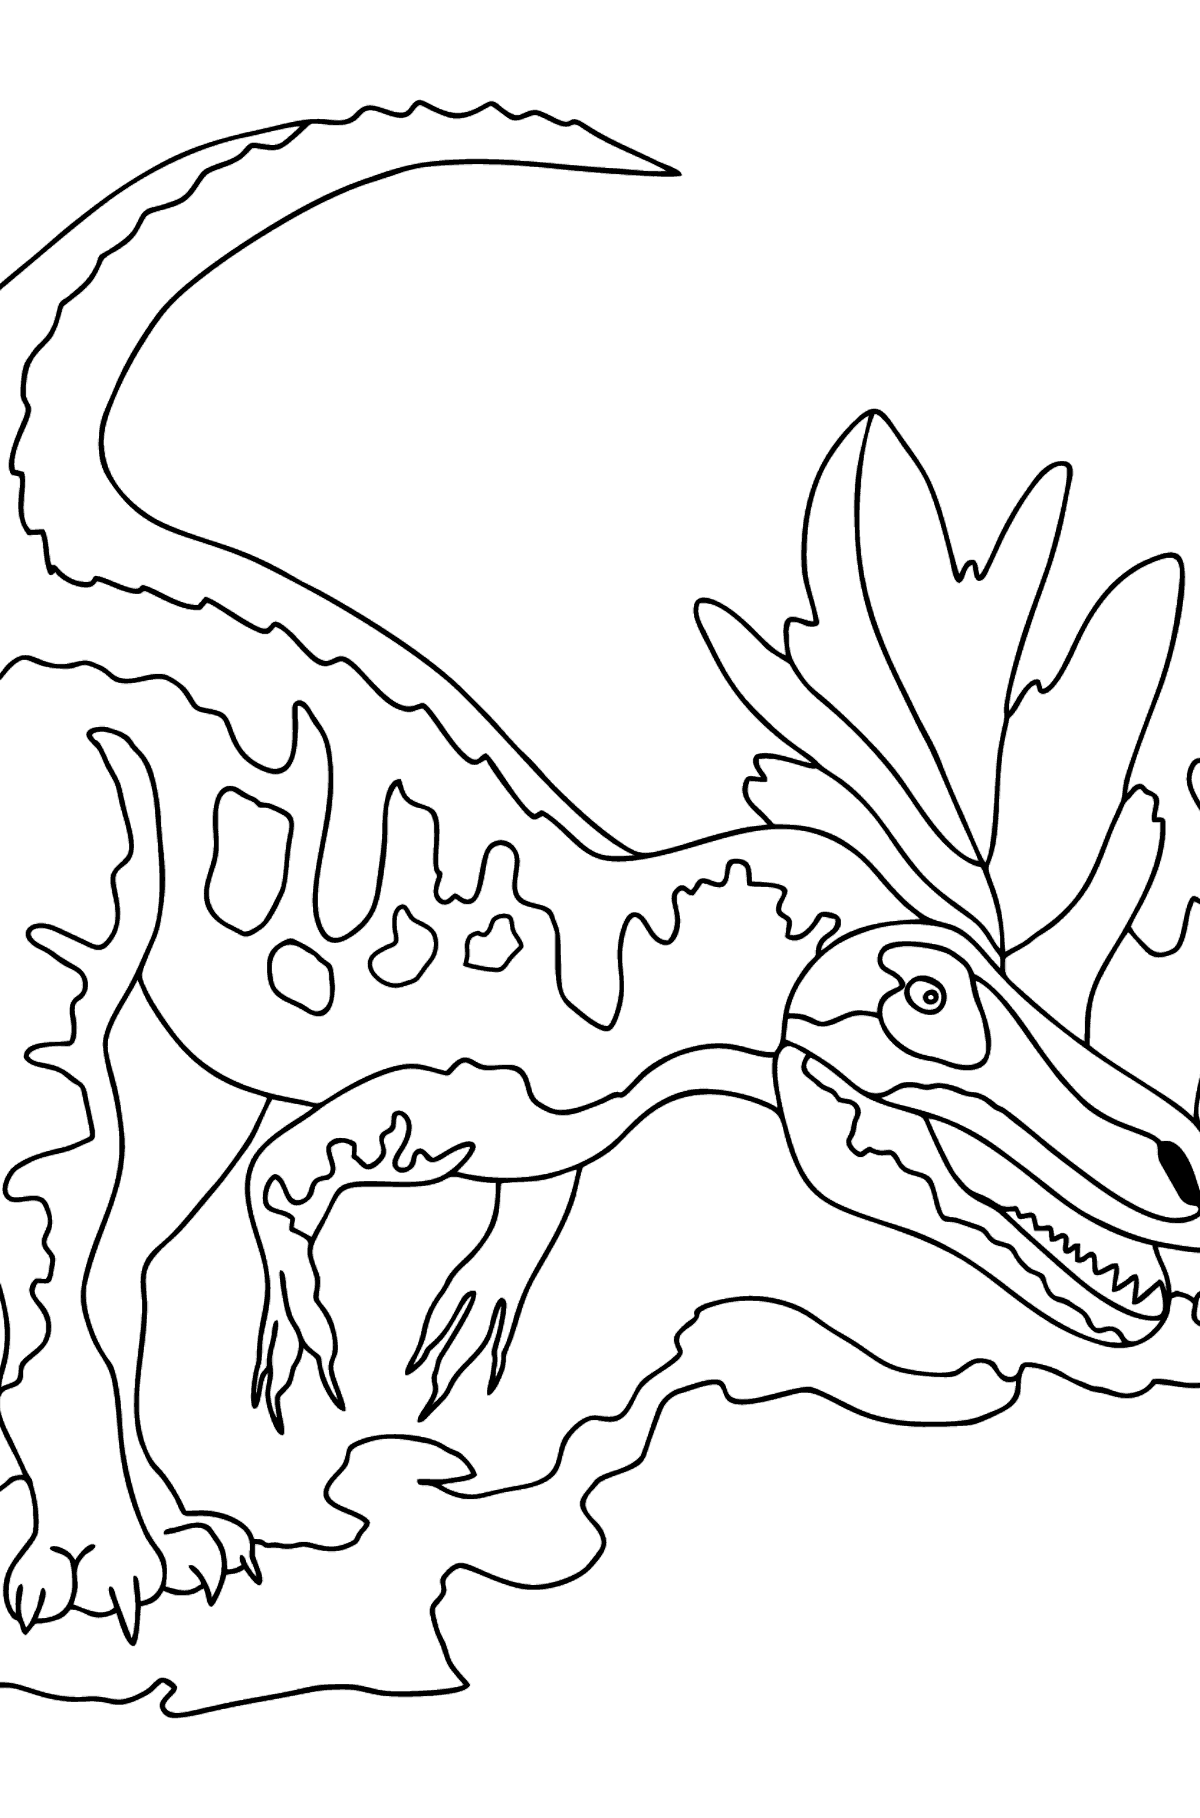 Розмальовка Аллозавр (складно) - Розмальовки для дітей